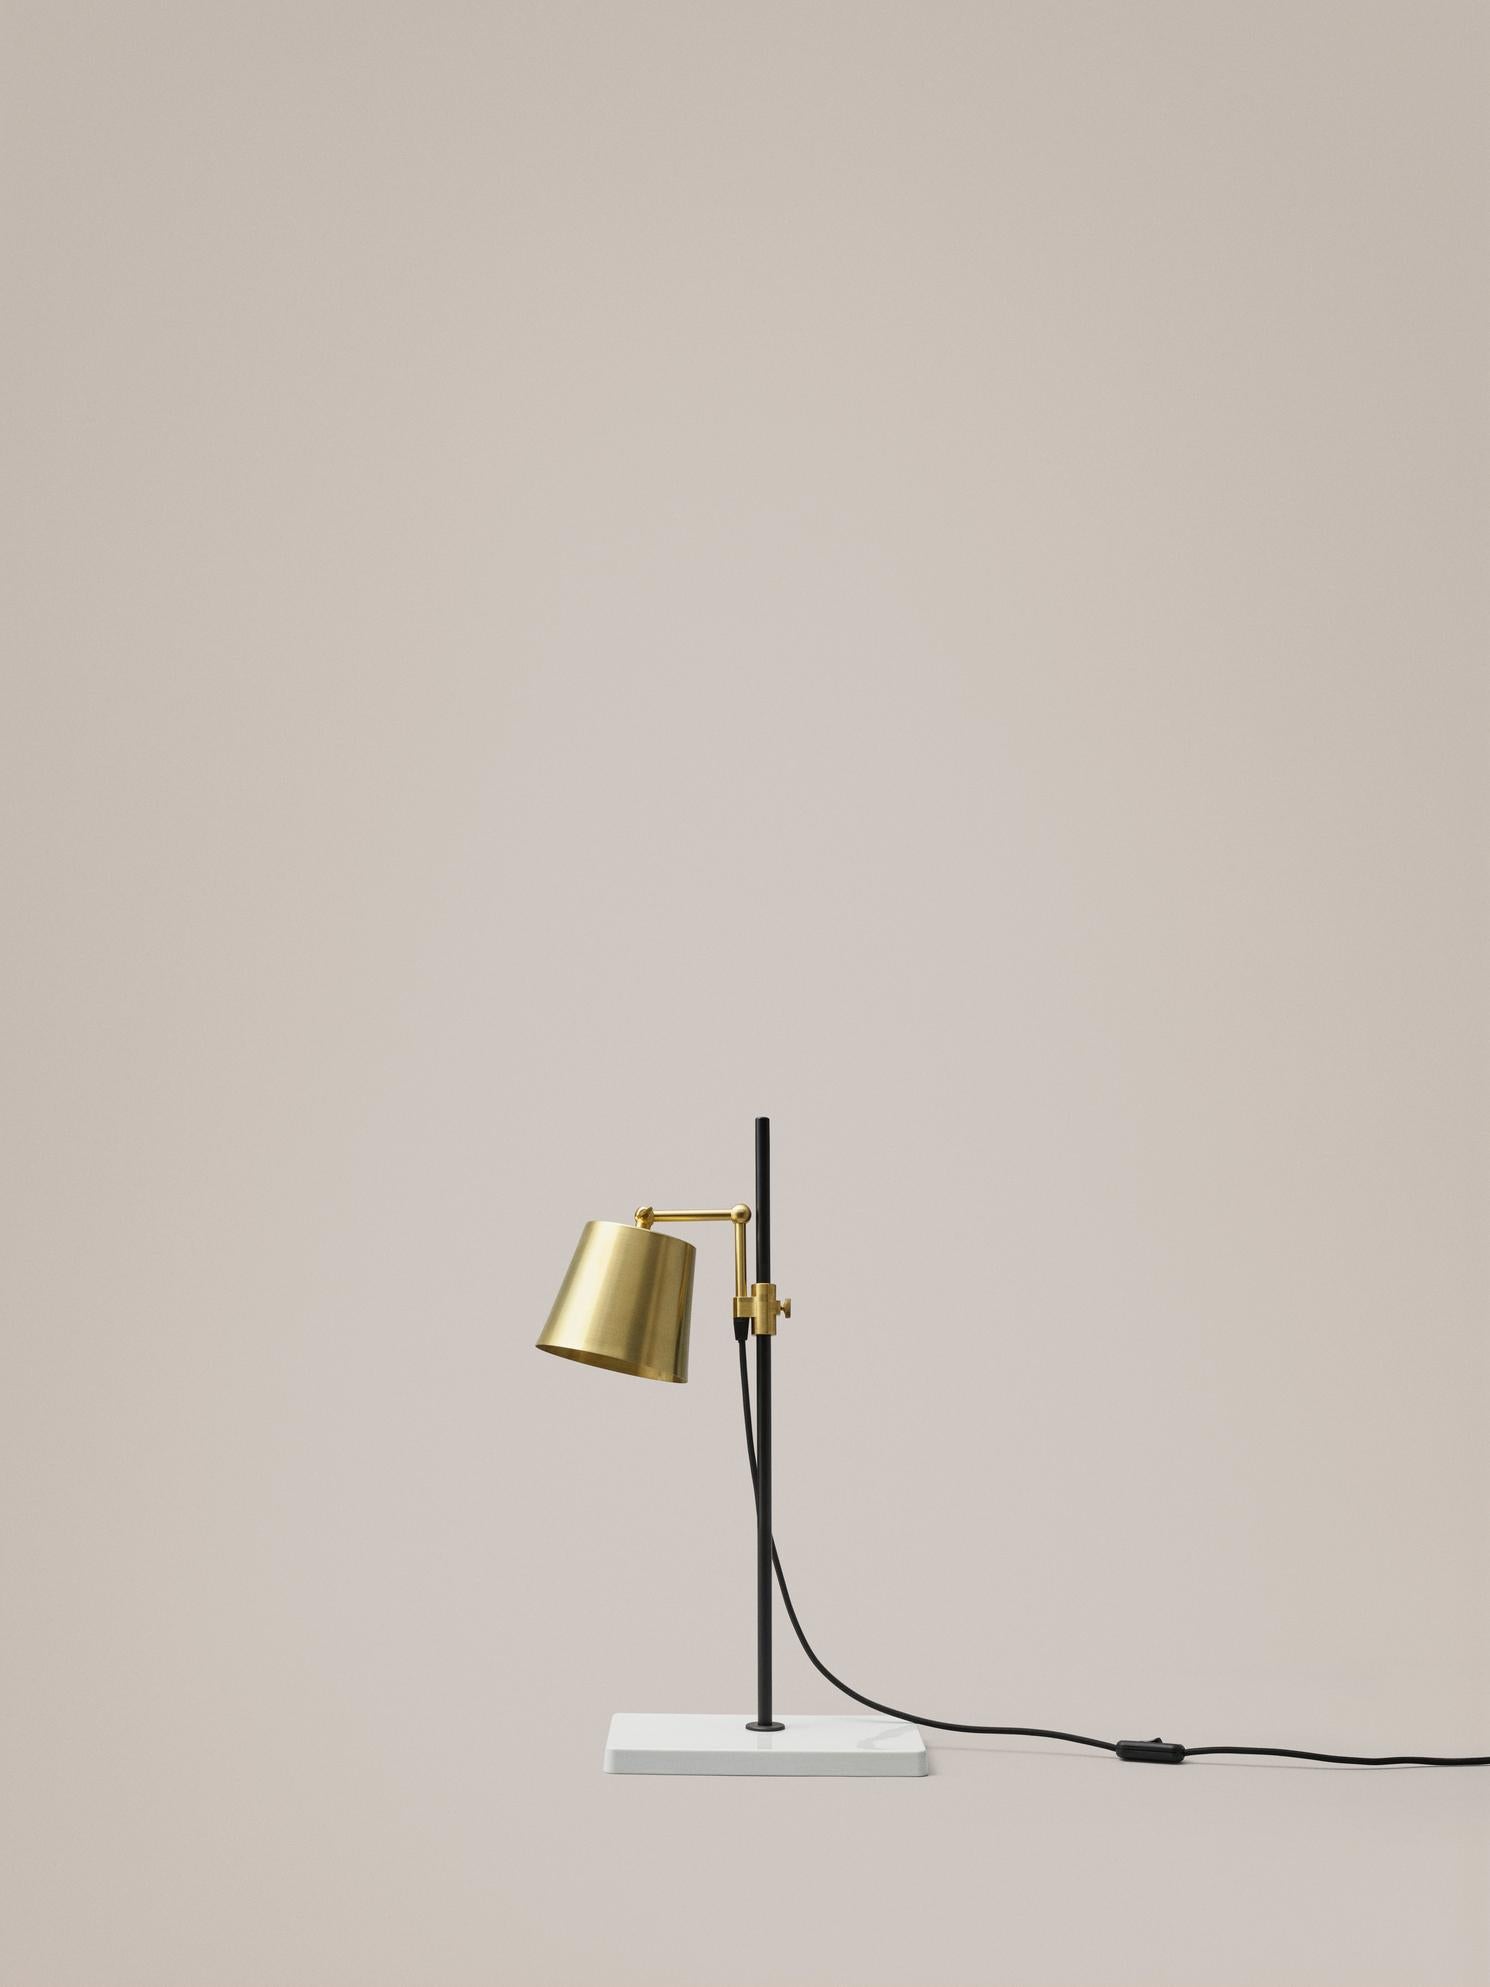 Danish Anatomy Design 'Lab Light Table' Brass, Porcelain and Steel Lamp by Karakter For Sale